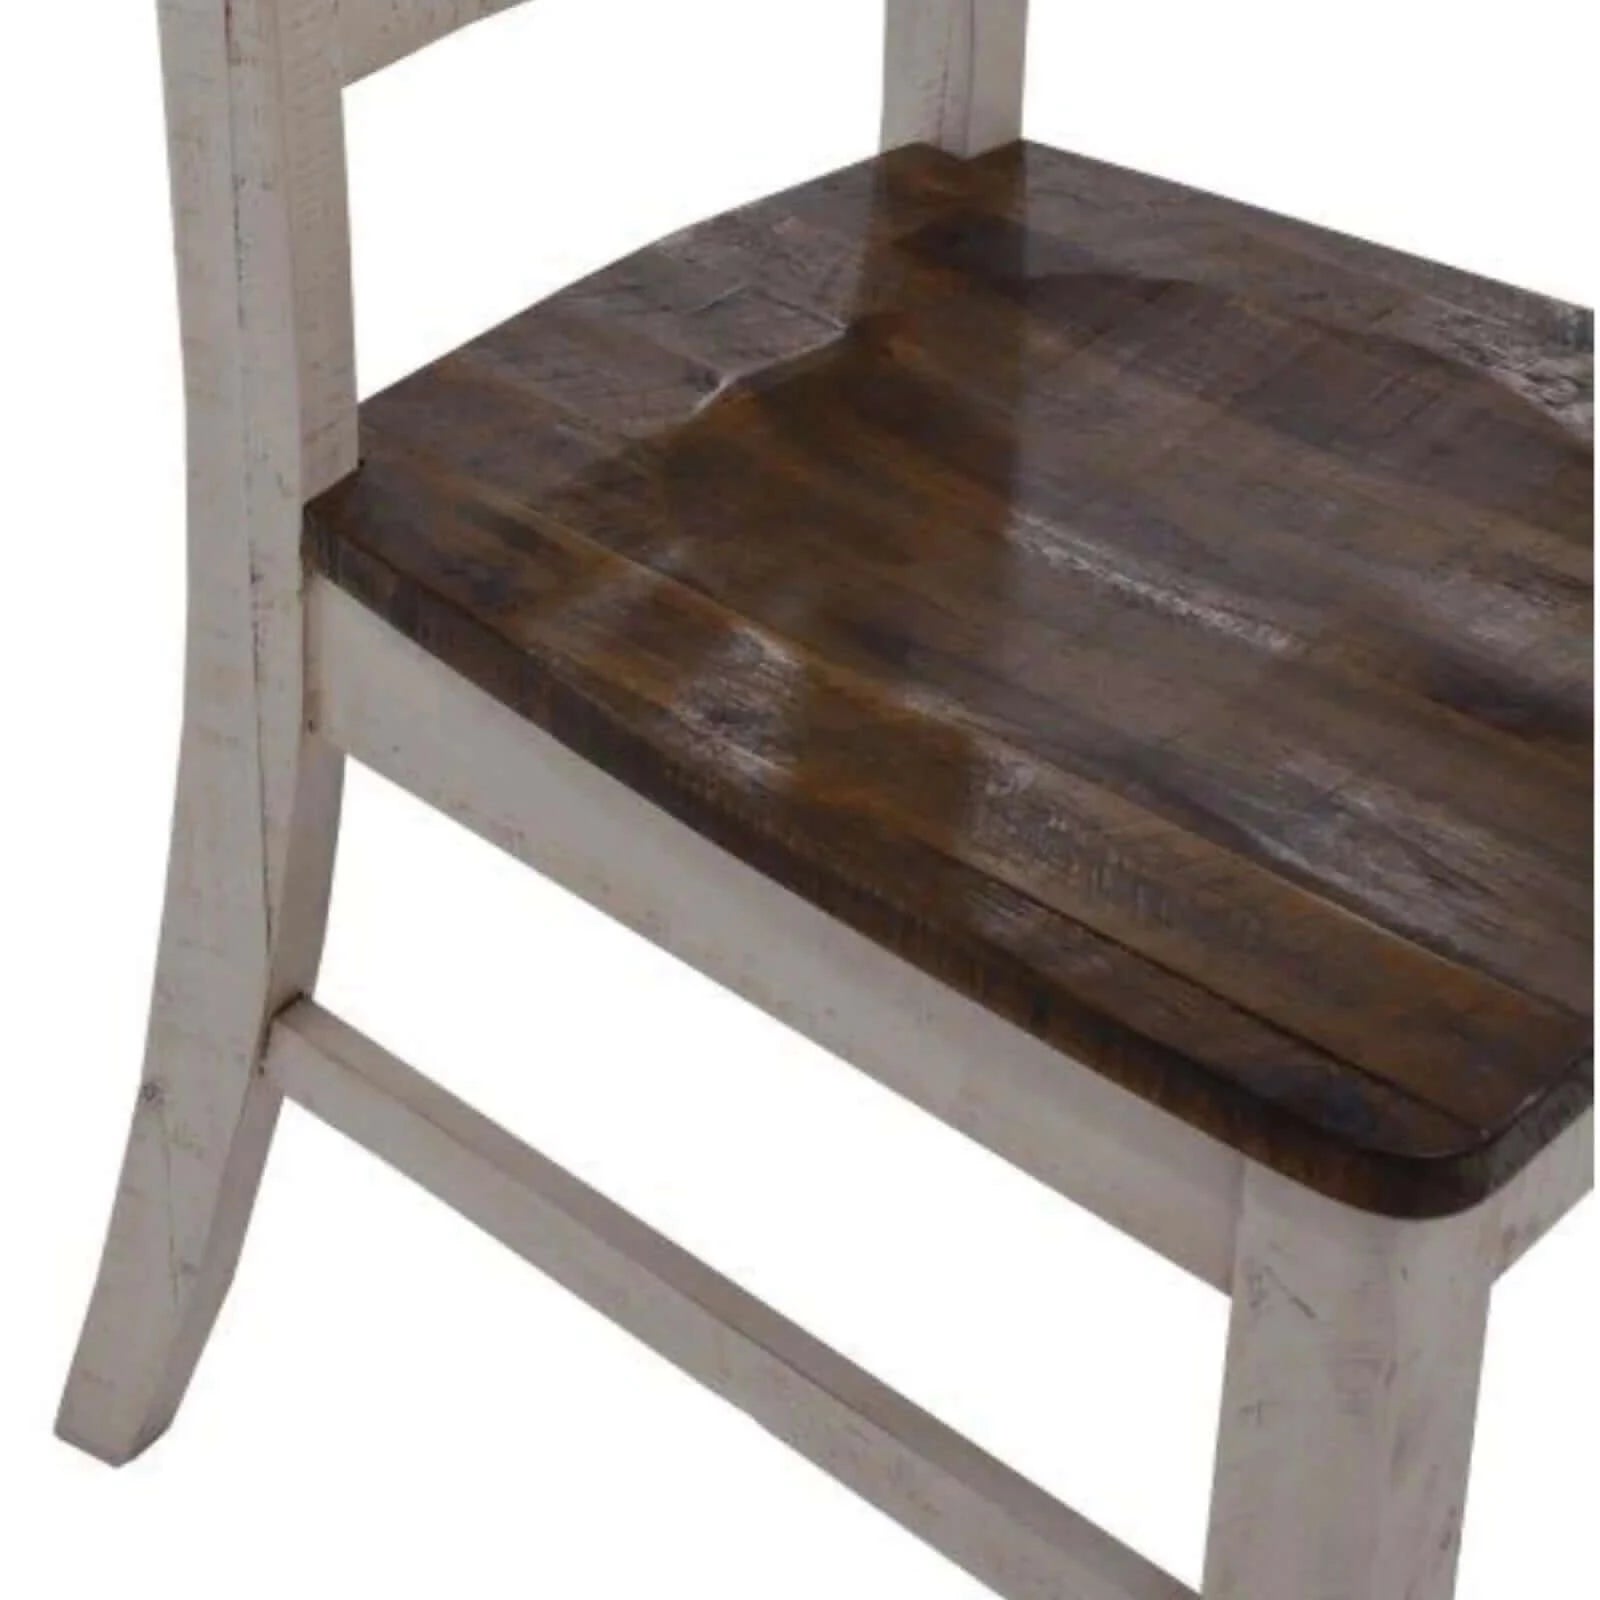 Buy erica x-back dining chair set of 6 solid acacia timber wood hampton brown white - upinteriors-Upinteriors